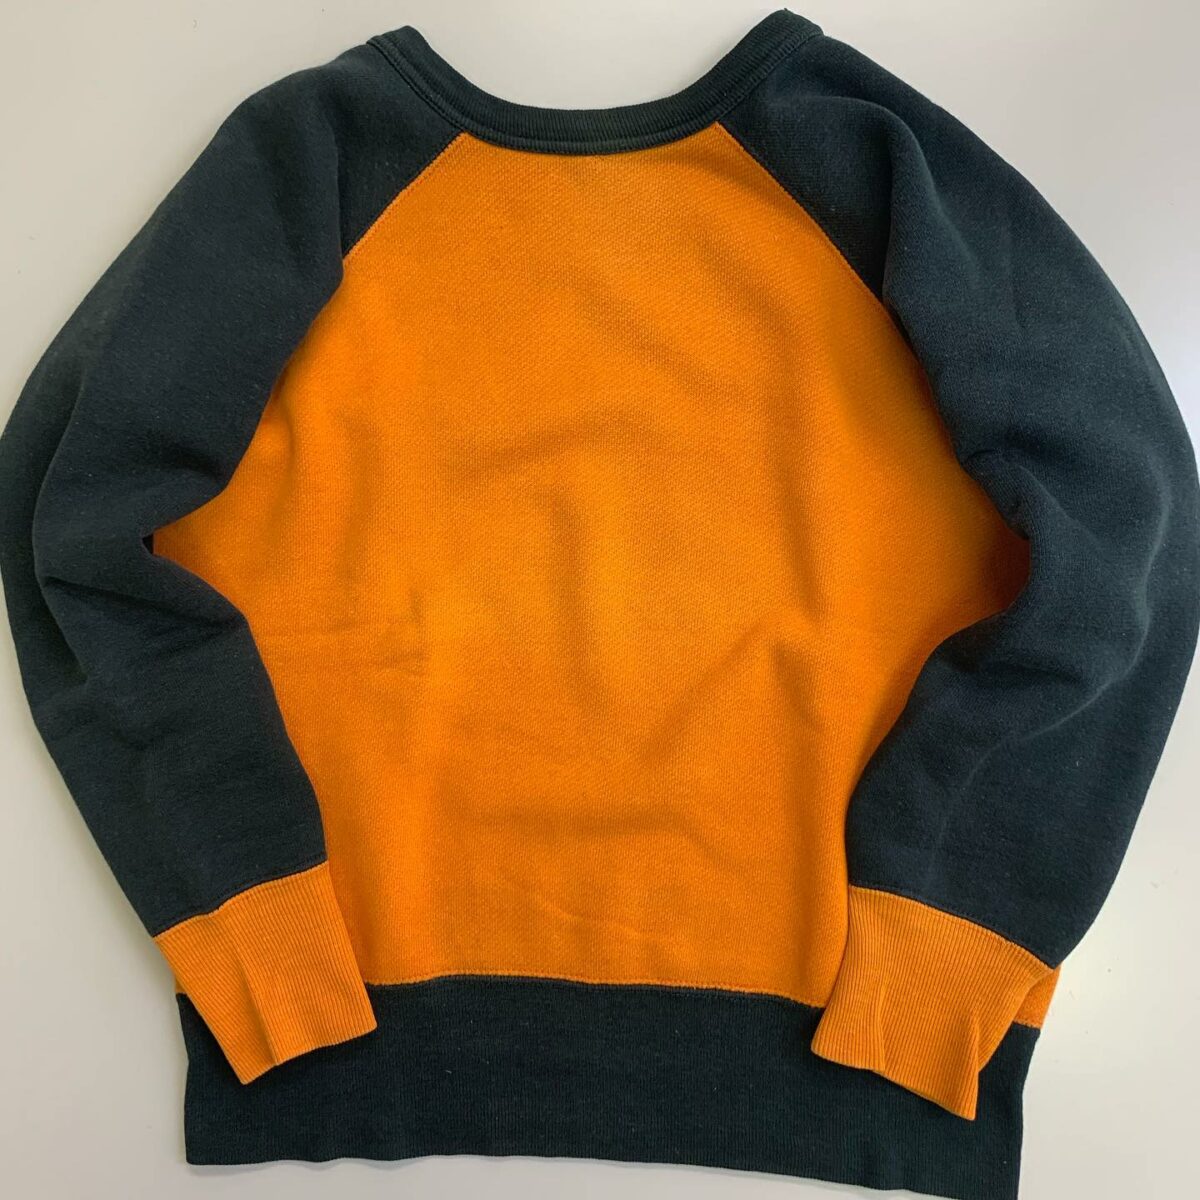 Sweatshirt from Ryota Yamasaki's collection